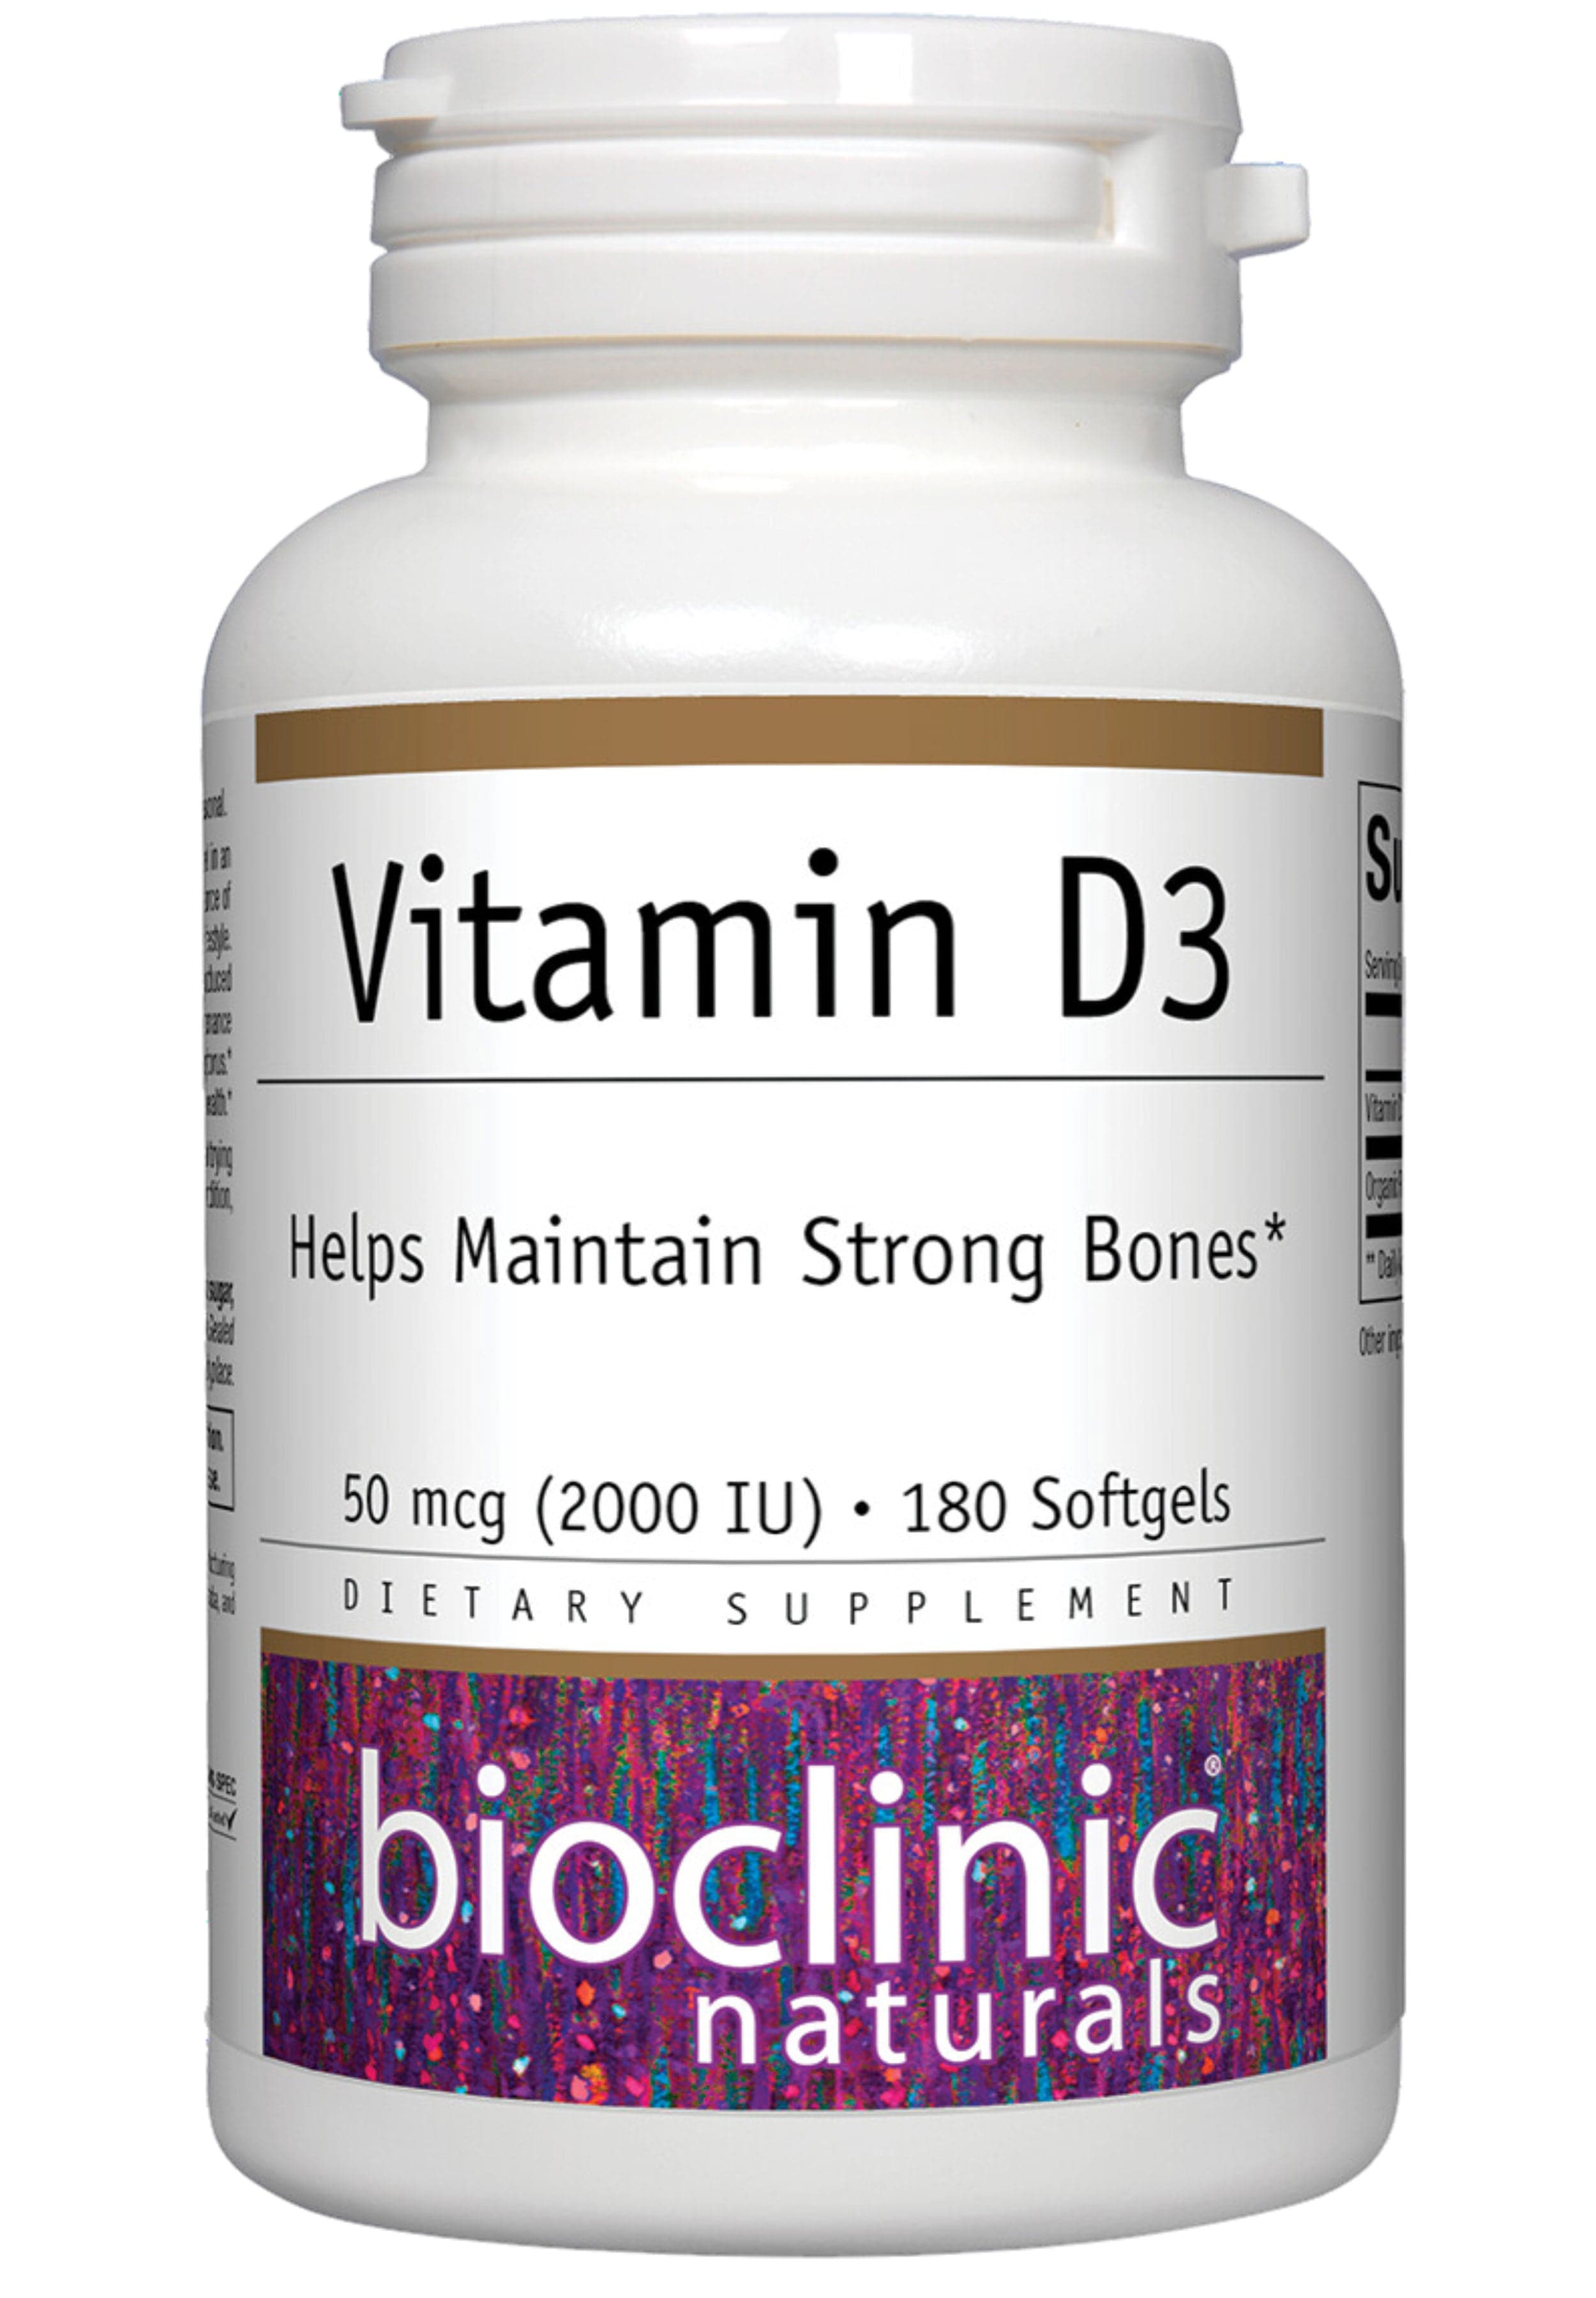 Bioclinic Naturals Vitamin D3 50 mcg (2000 IU)